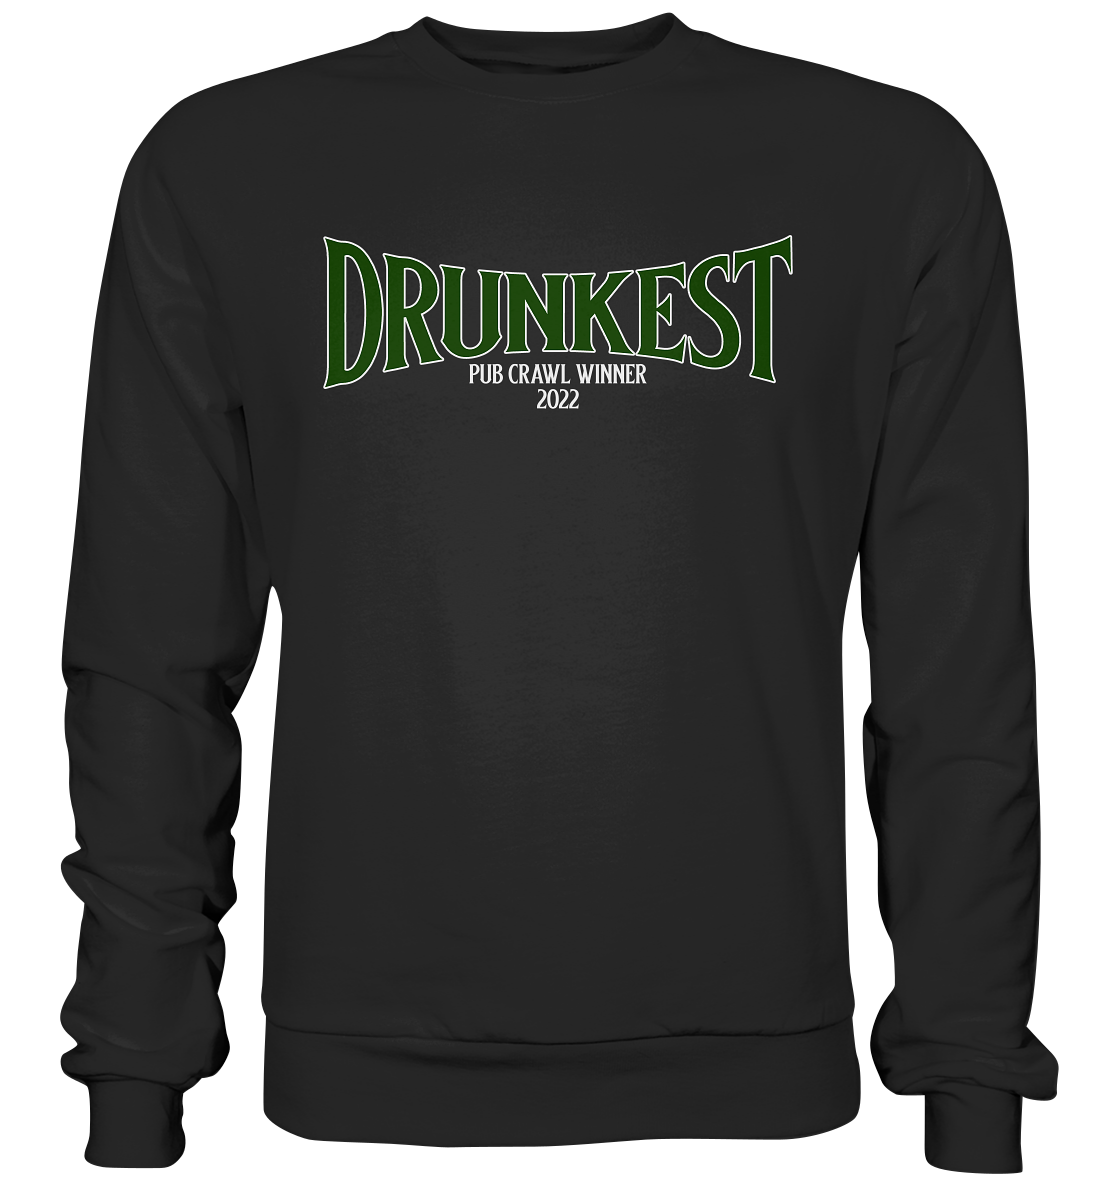 Drunkest "Pub Crawl Winner 2022" - Premium Sweatshirt